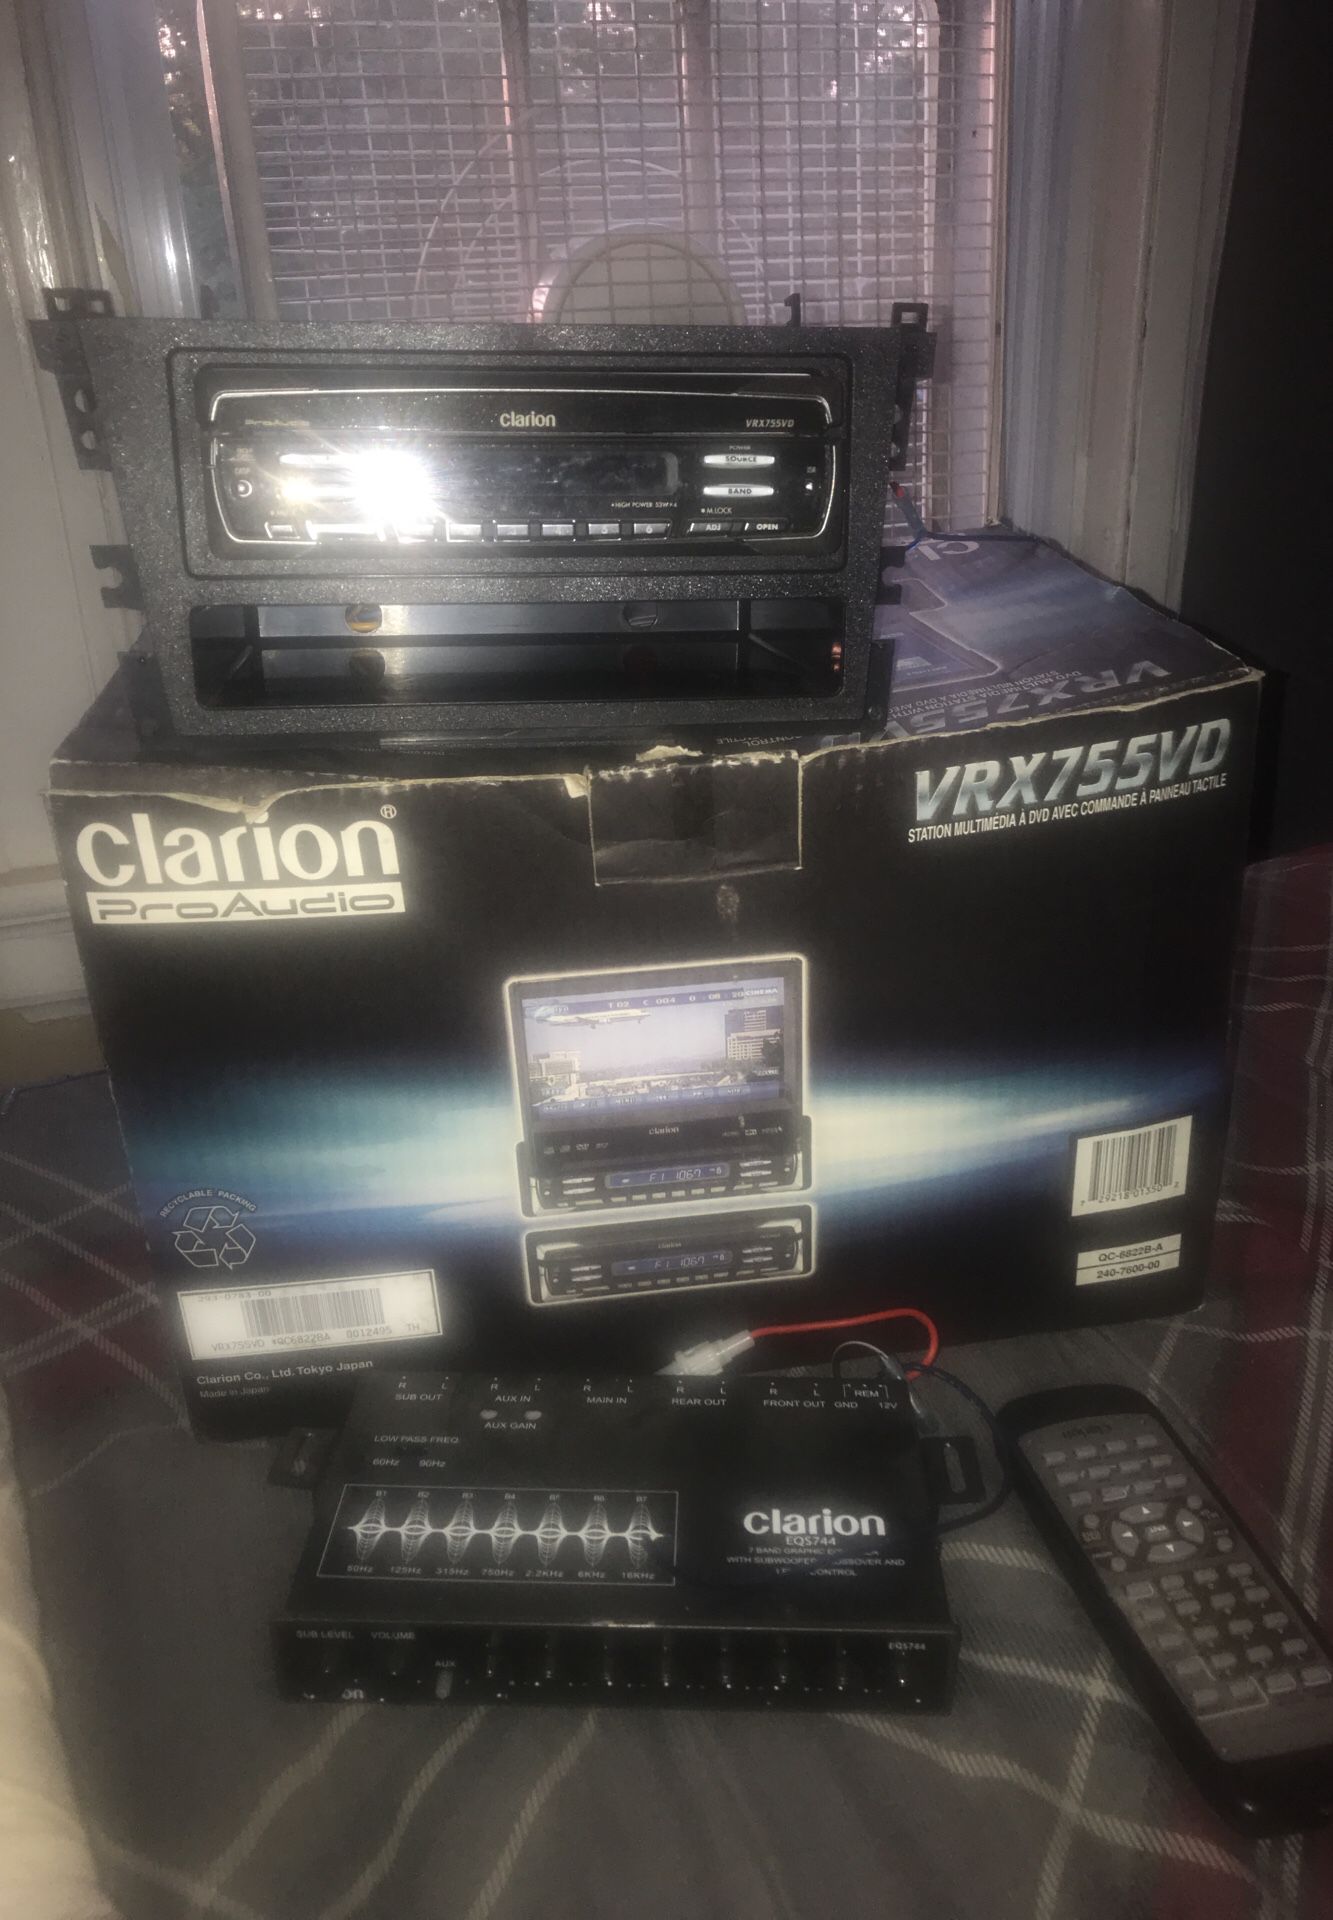 Clarion pro audio brz755vd / clarion eqs 744